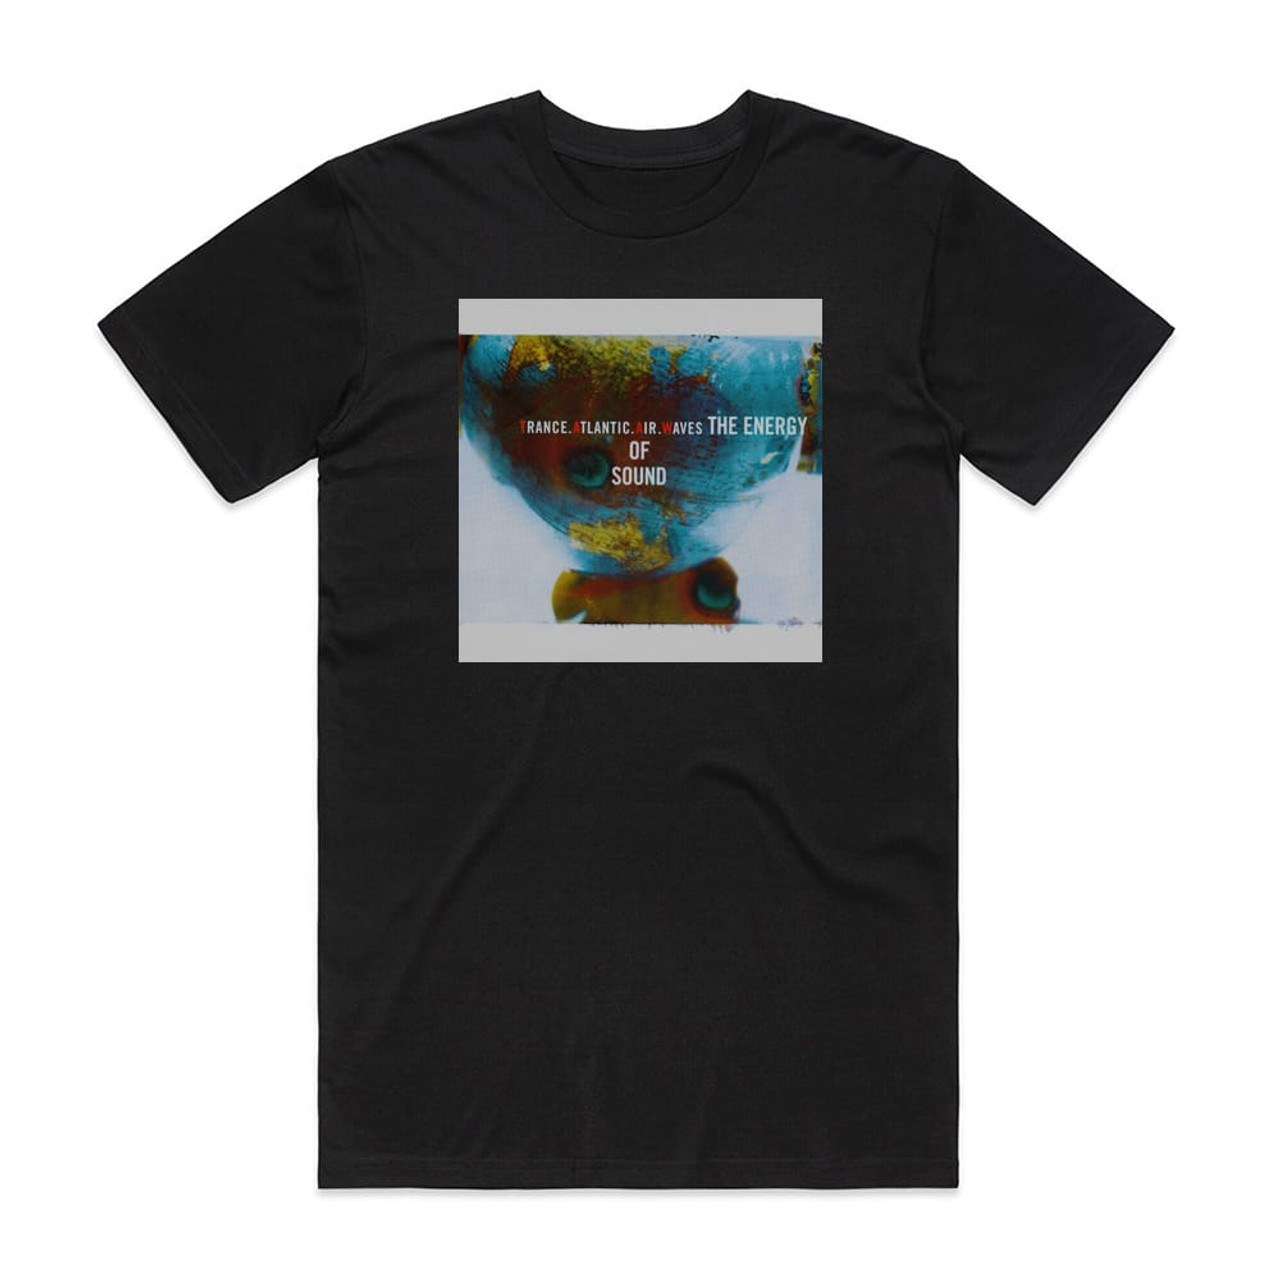 Trance Atlantic Air Waves The Energy Of Sound Album Cover T-Shirt Black